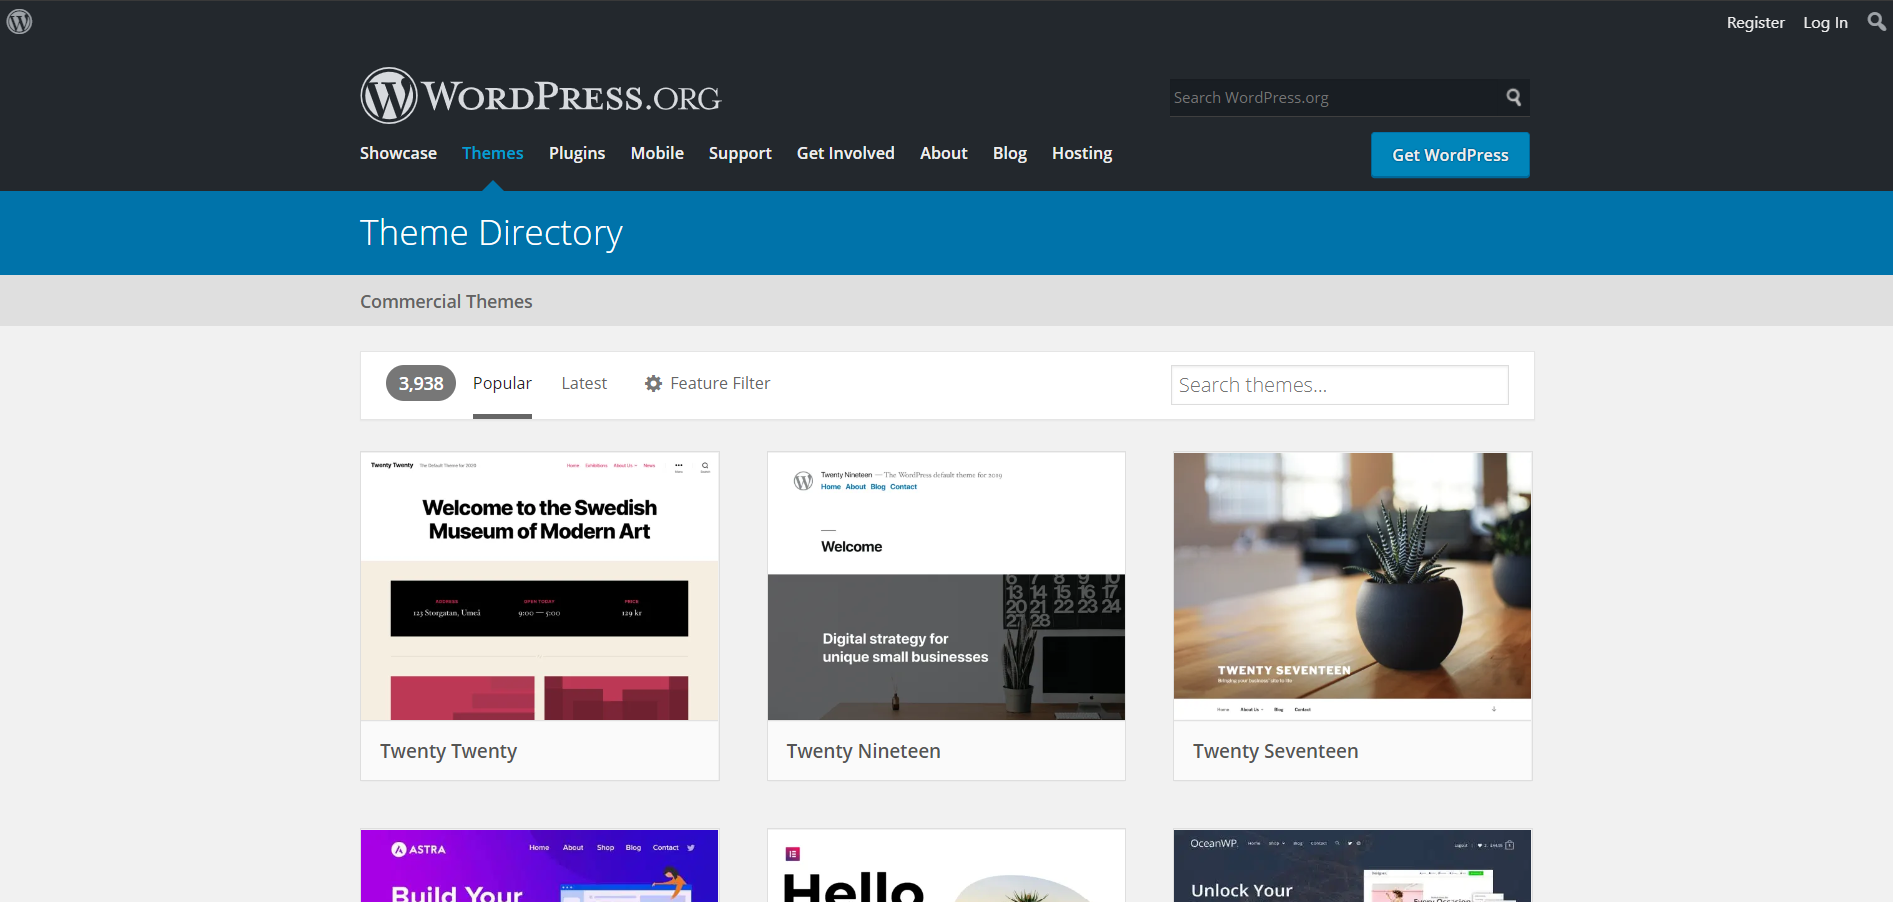 The WordPress themes page